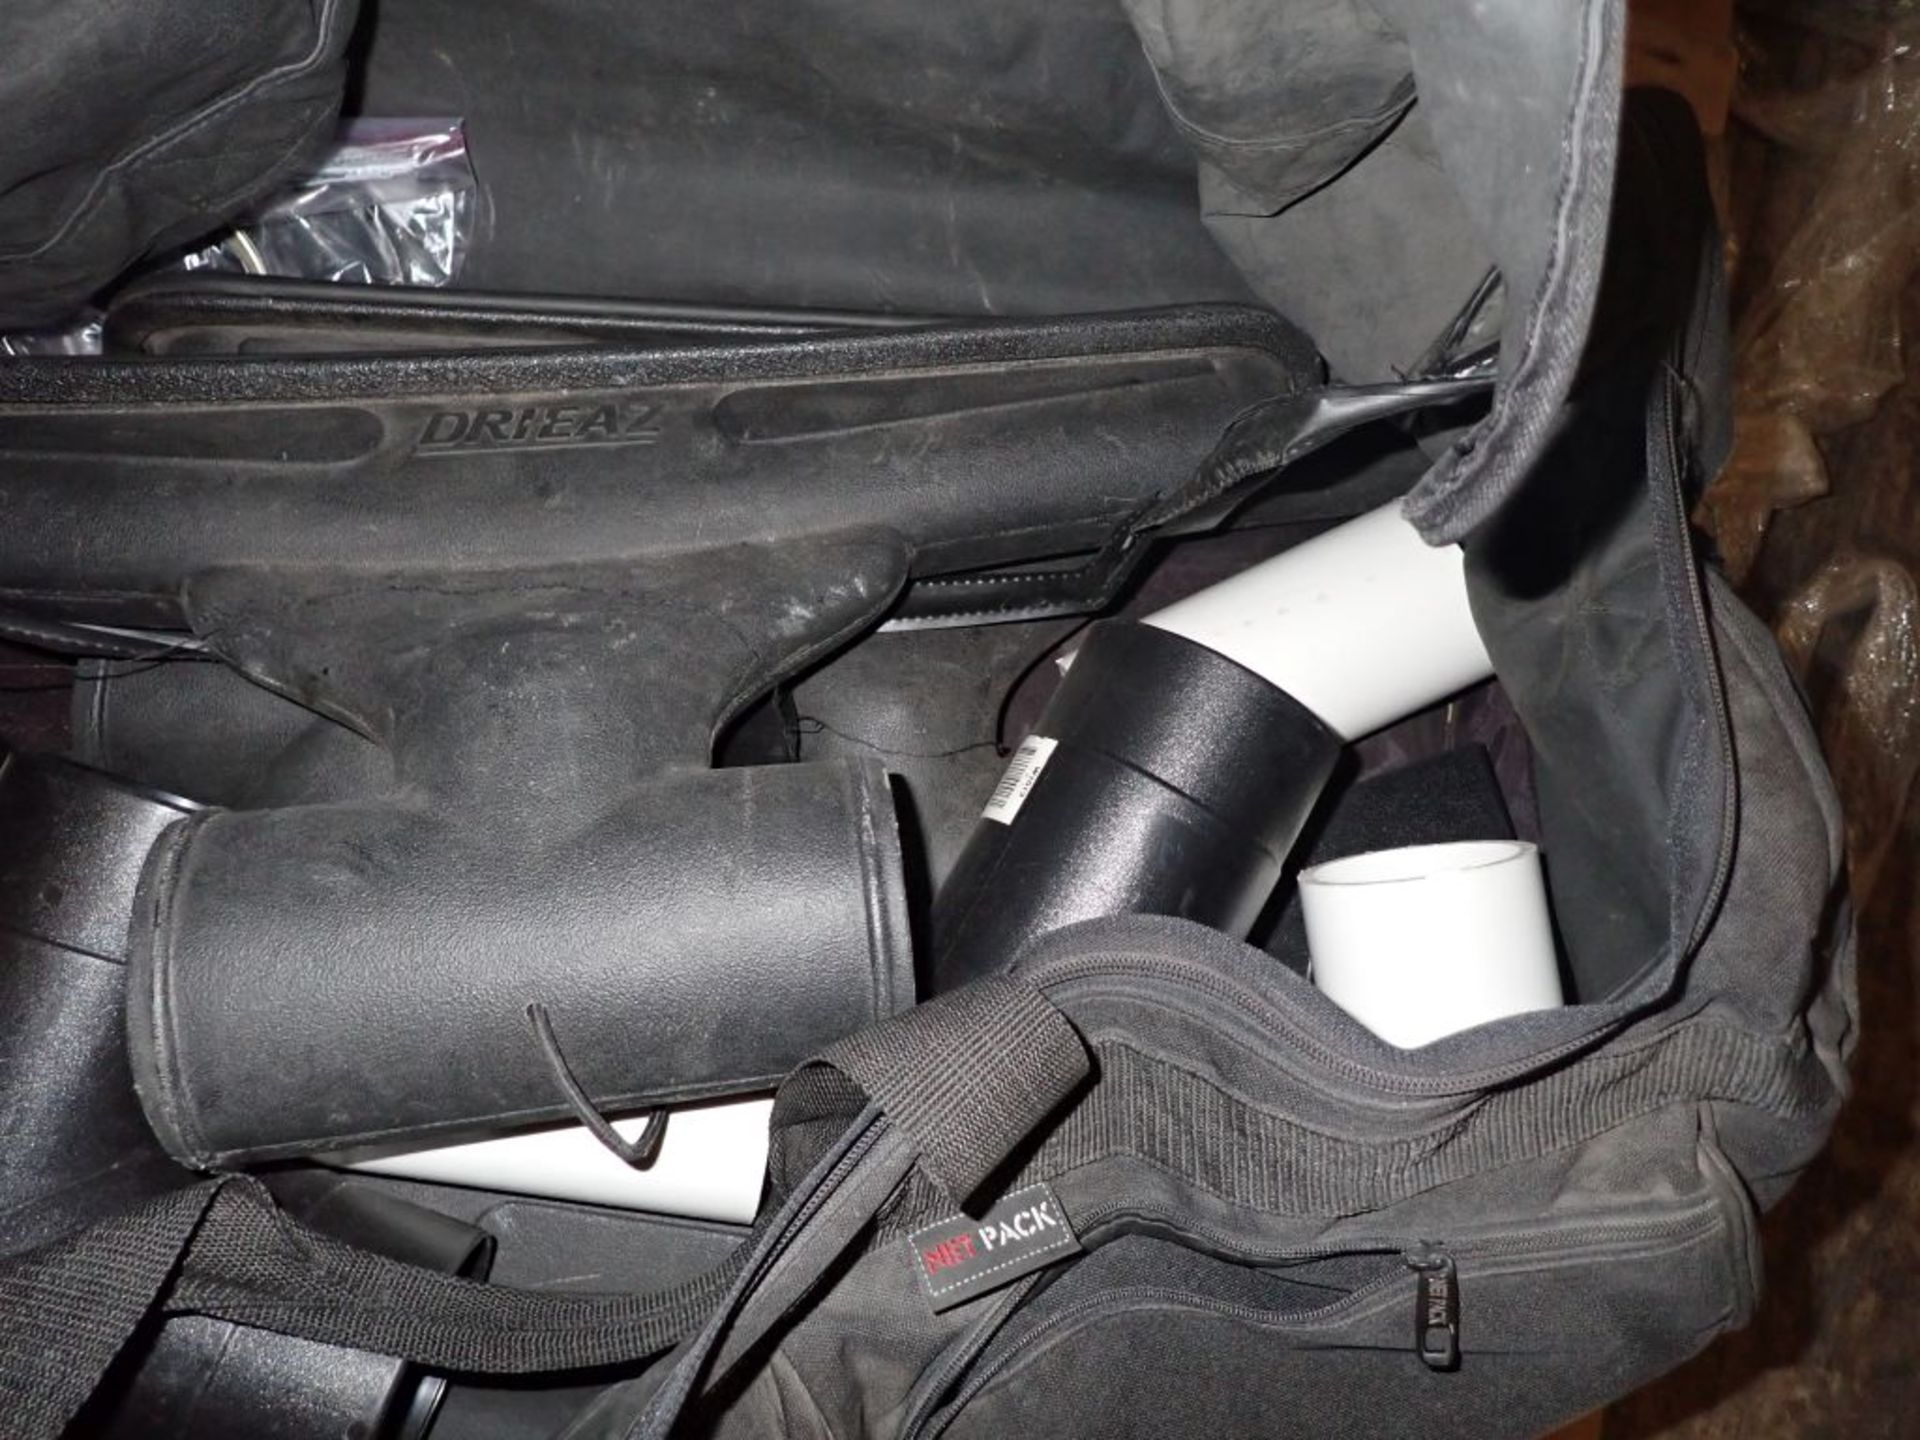 Drieaze Portable Duffle Bag - Image 4 of 5